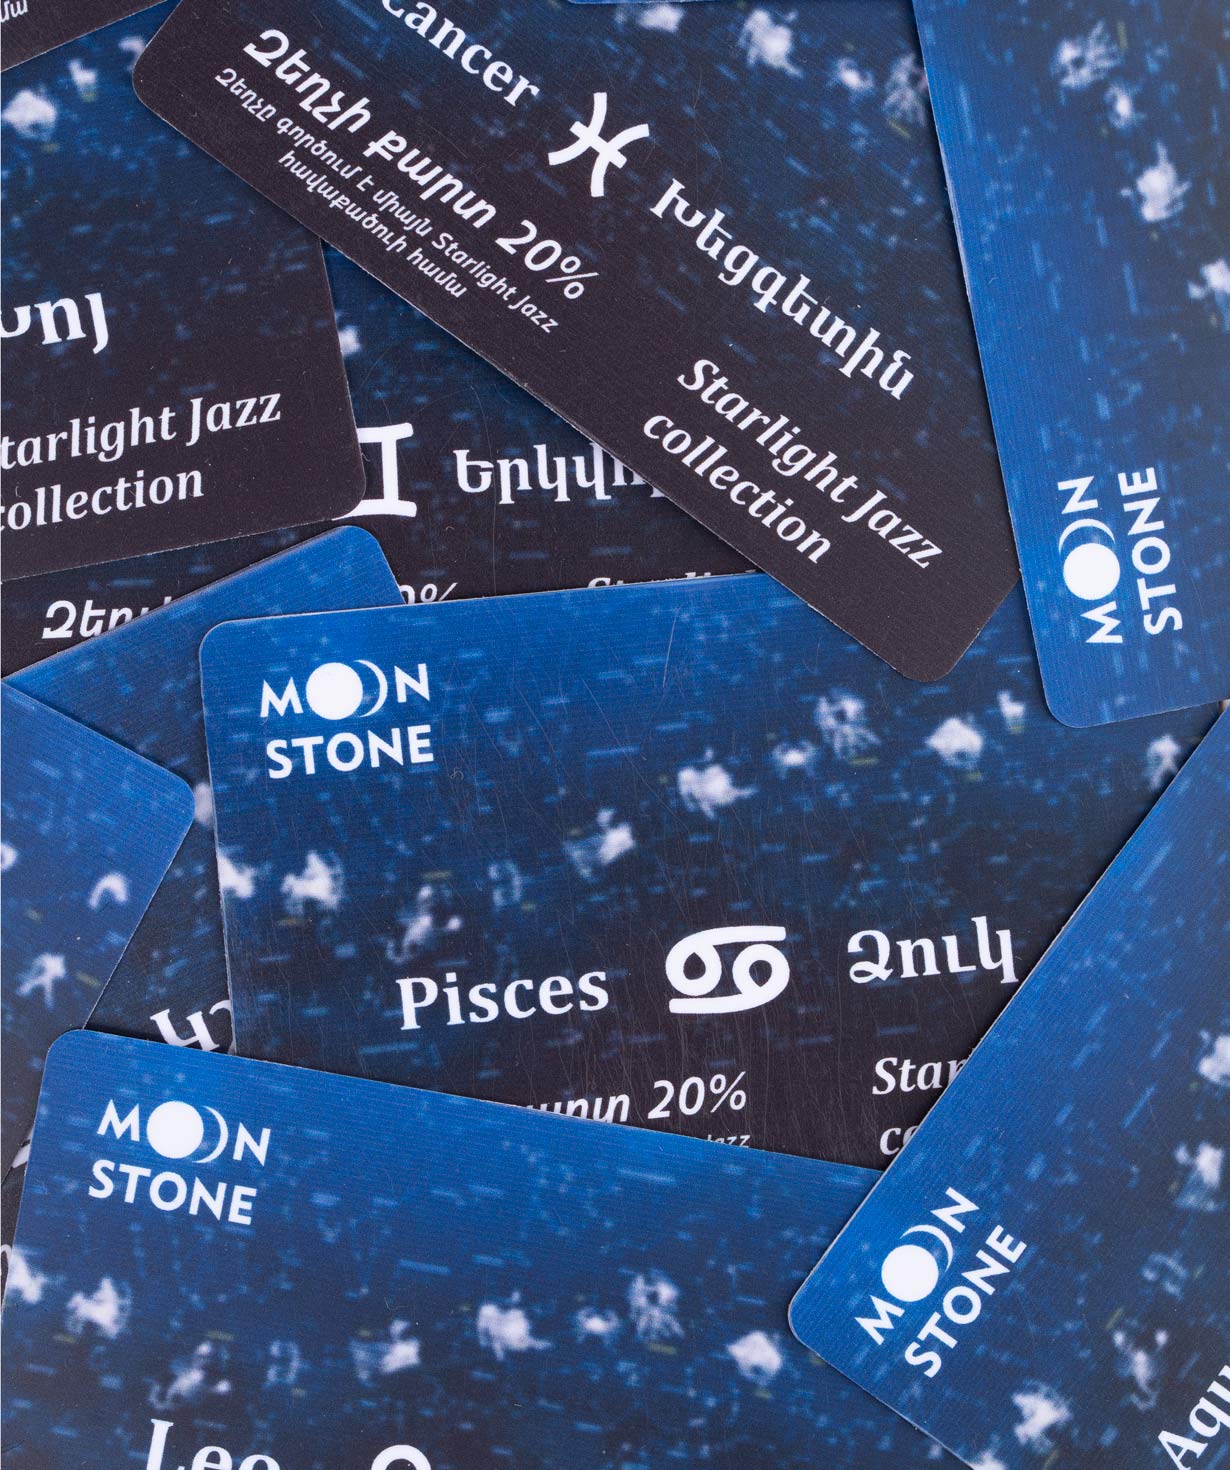 Rhodium Plated Silver Pendant Aquarius Starlight Jazz Collection